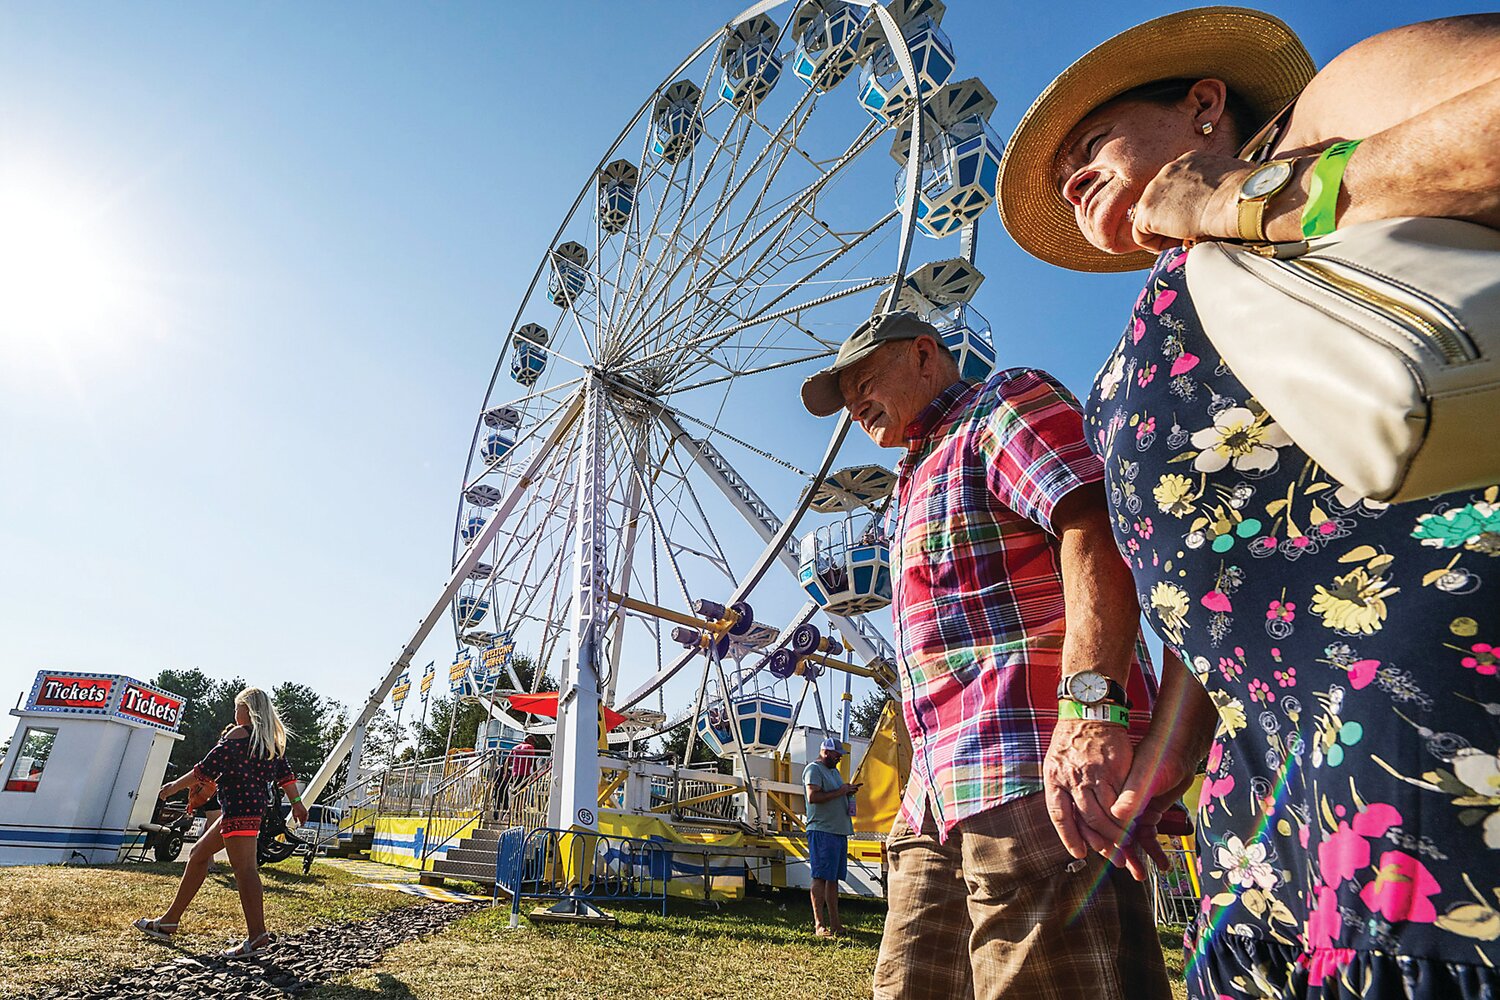 Festival goers walk hand-in-hand through the fair grounds.